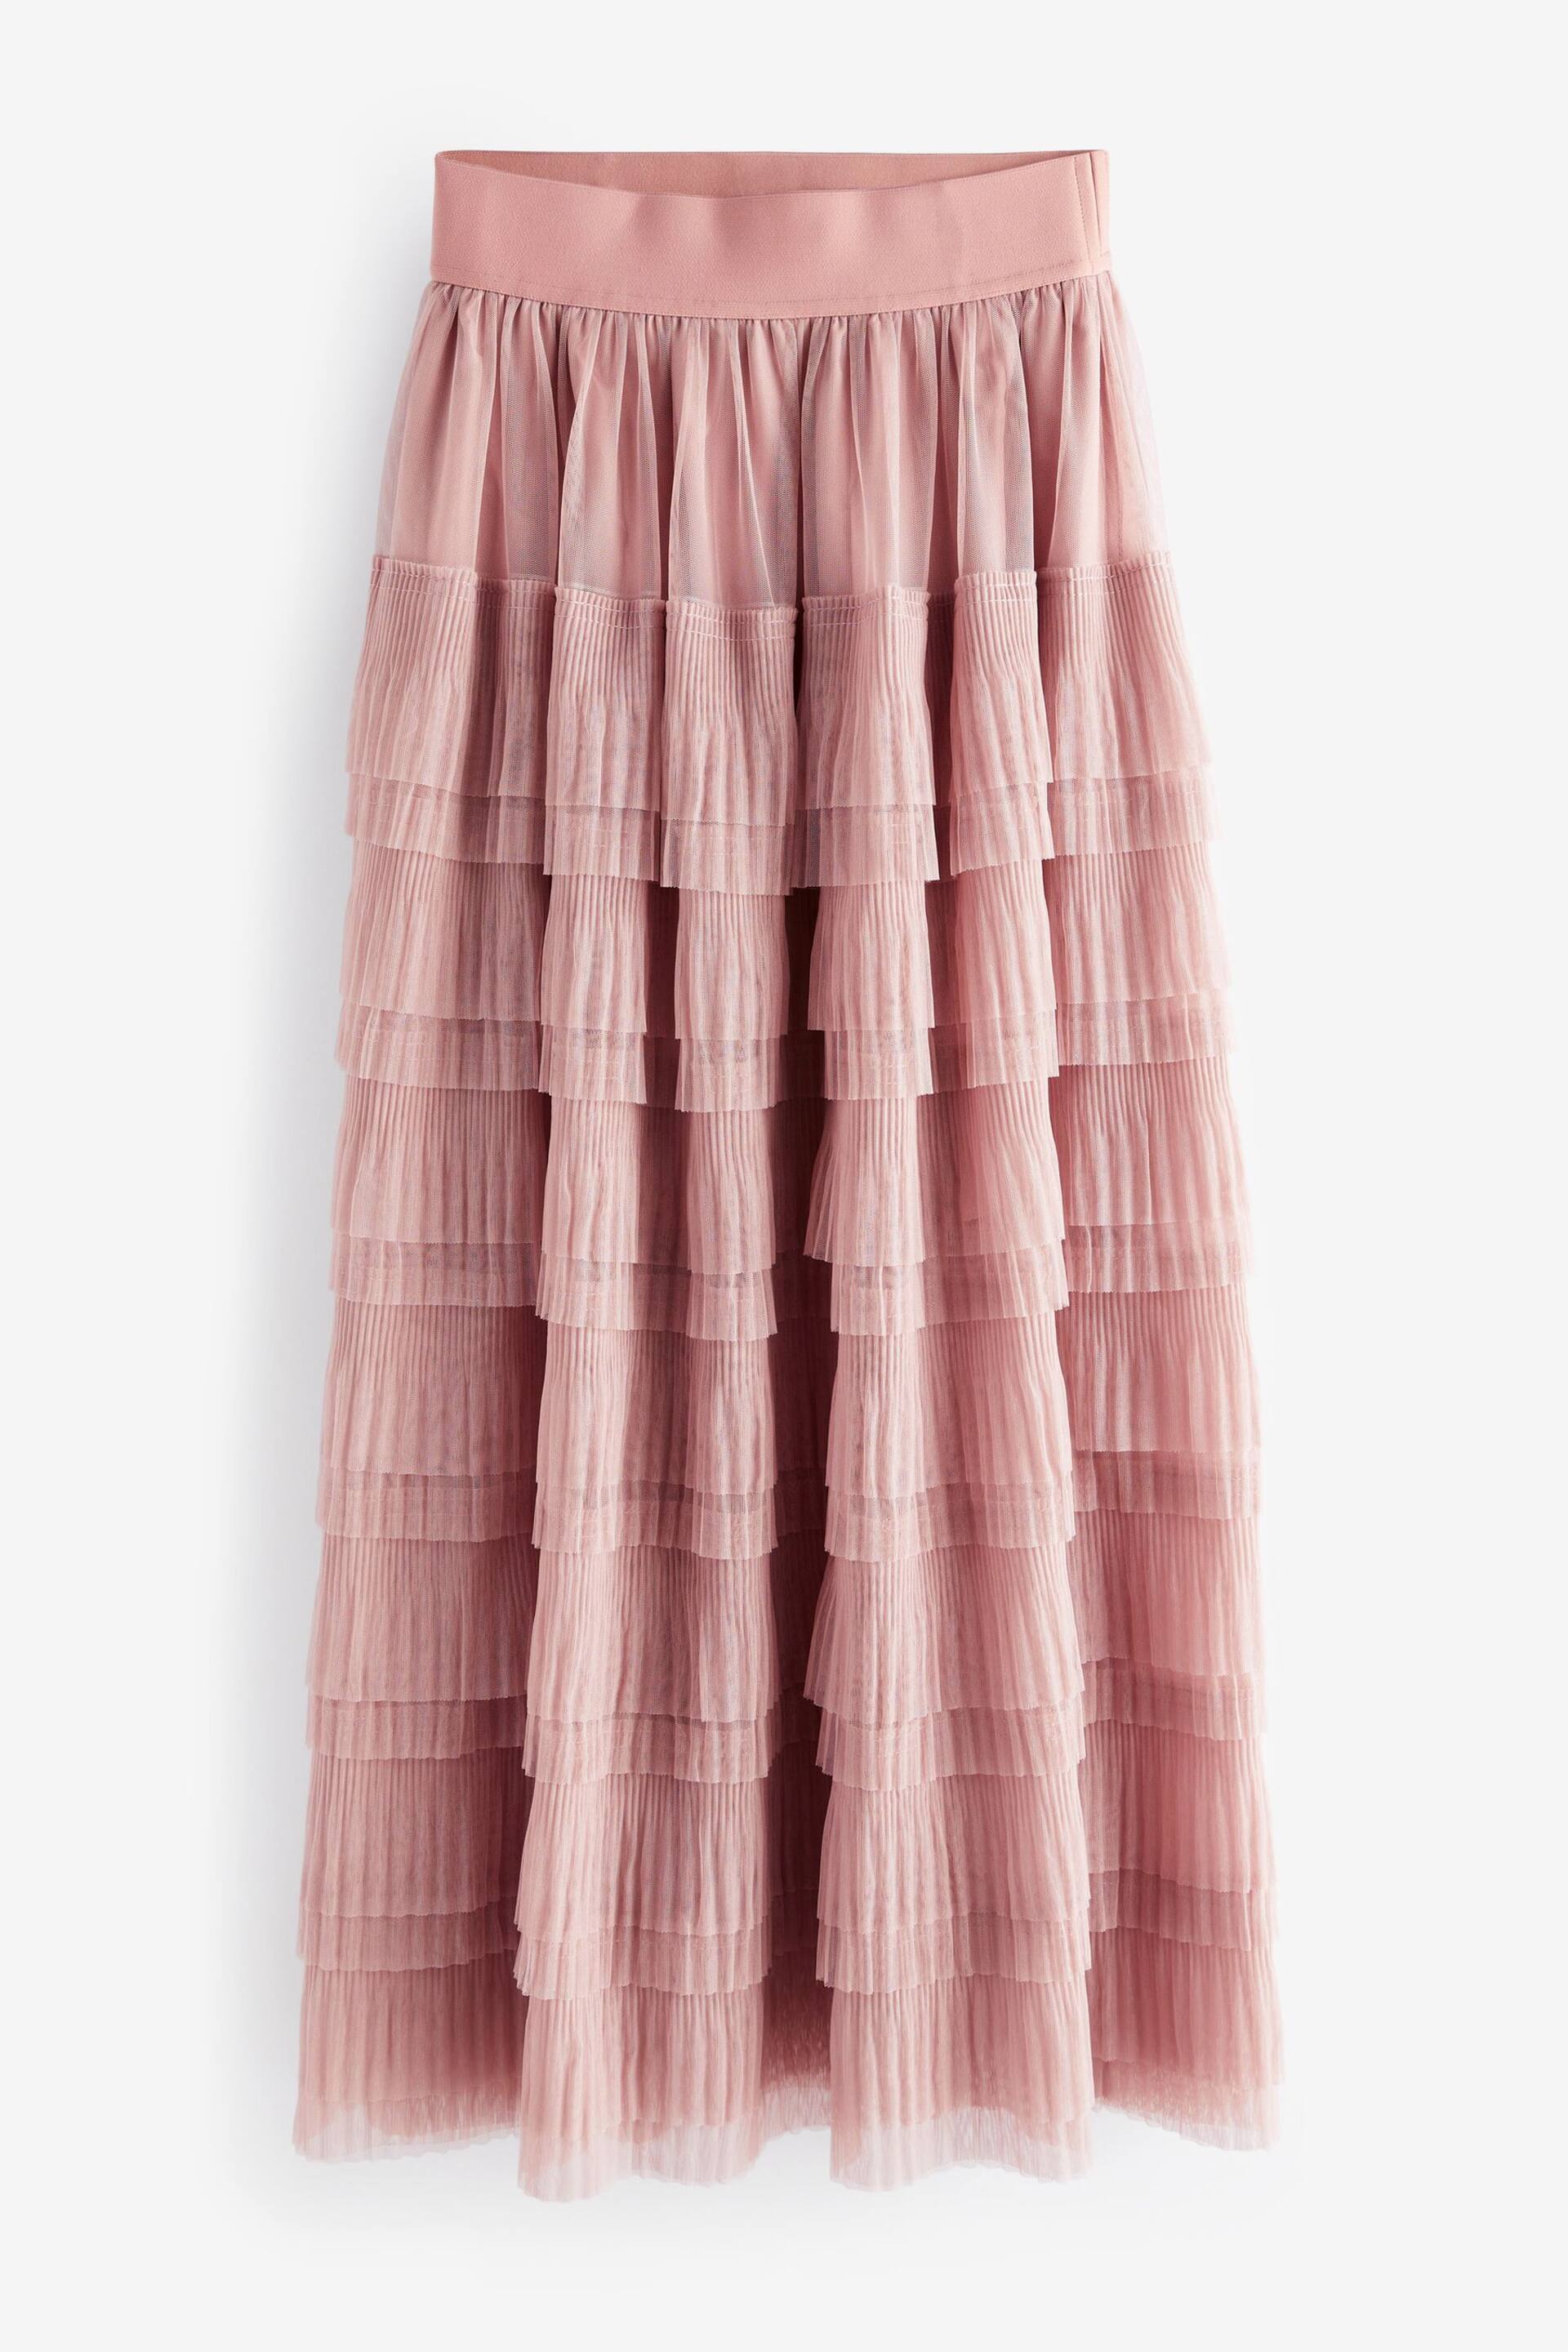 Pink Mesh Tulle Midi Skirt - Image 5 of 6